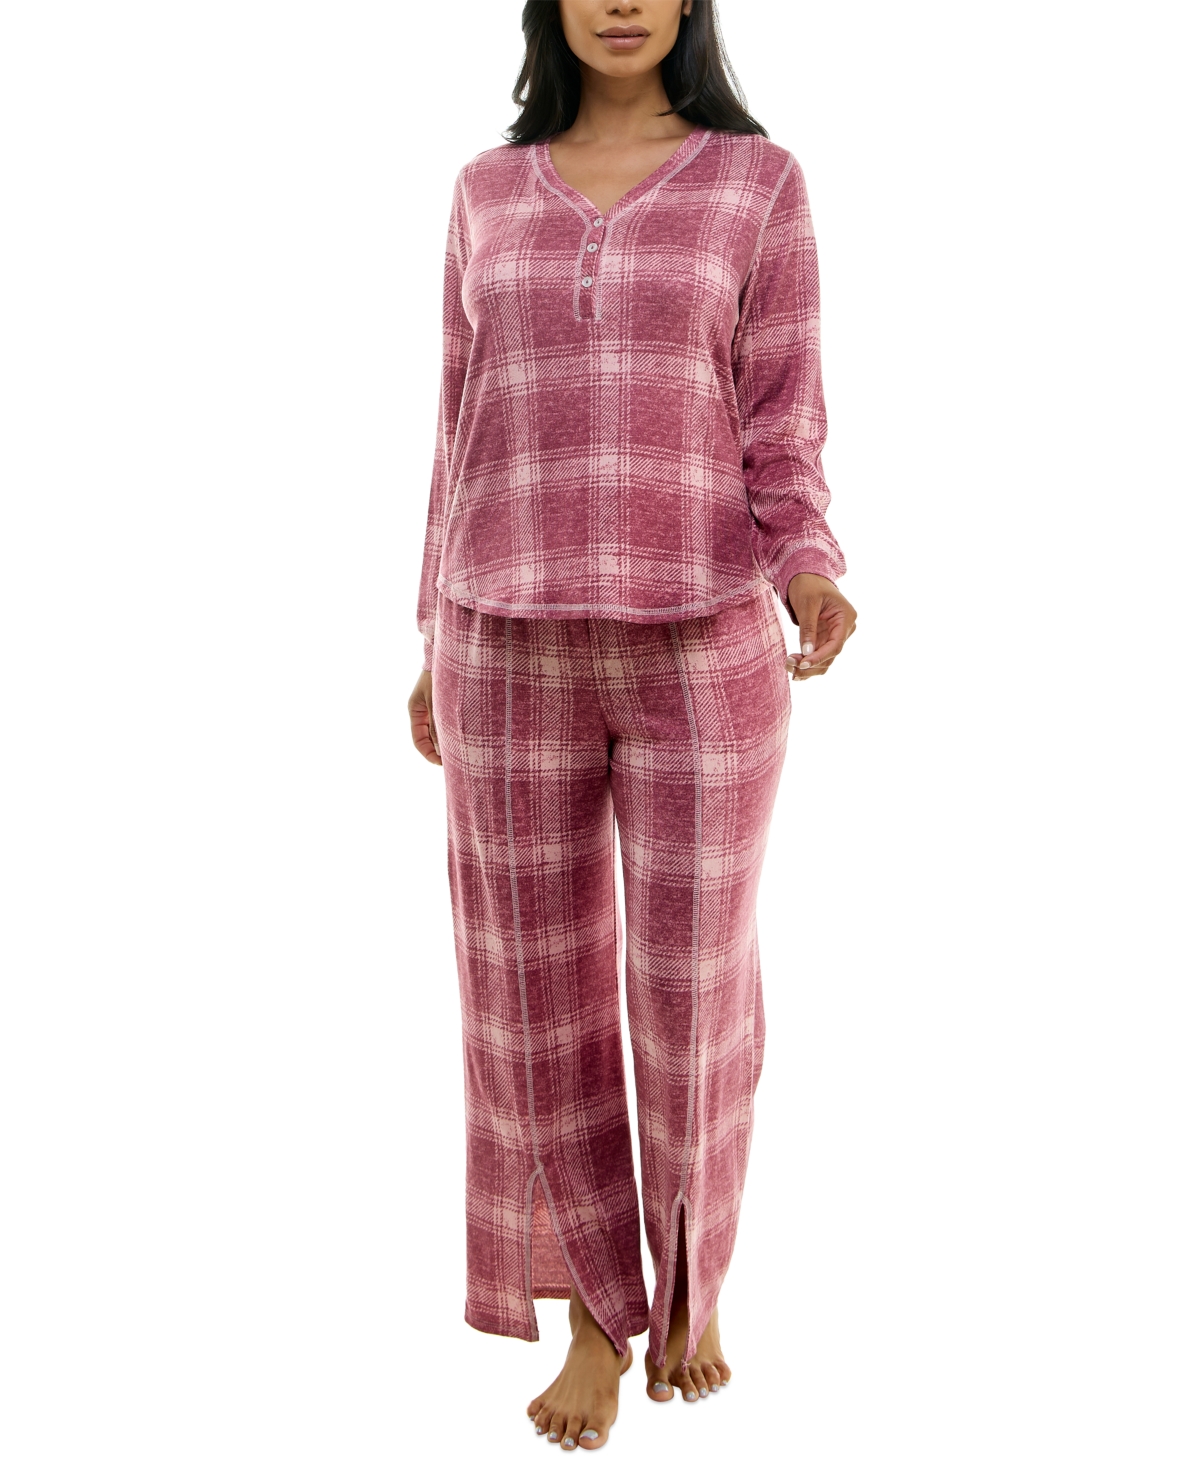 Roudelain Women's 2-pc. Printed Henley Pajamas Set In Beppo Distress Check